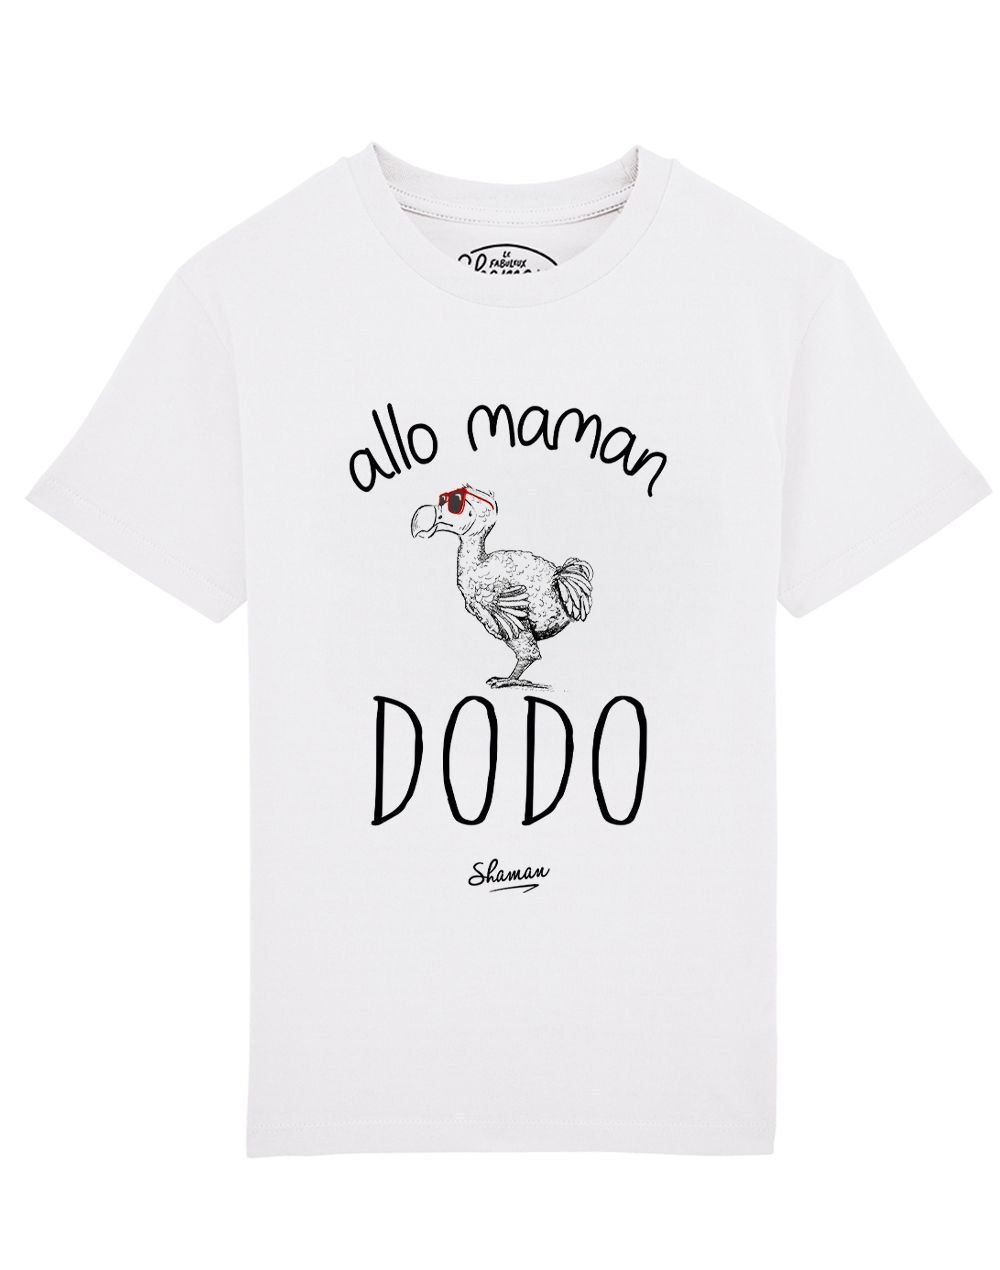 Tee shirt Dodo